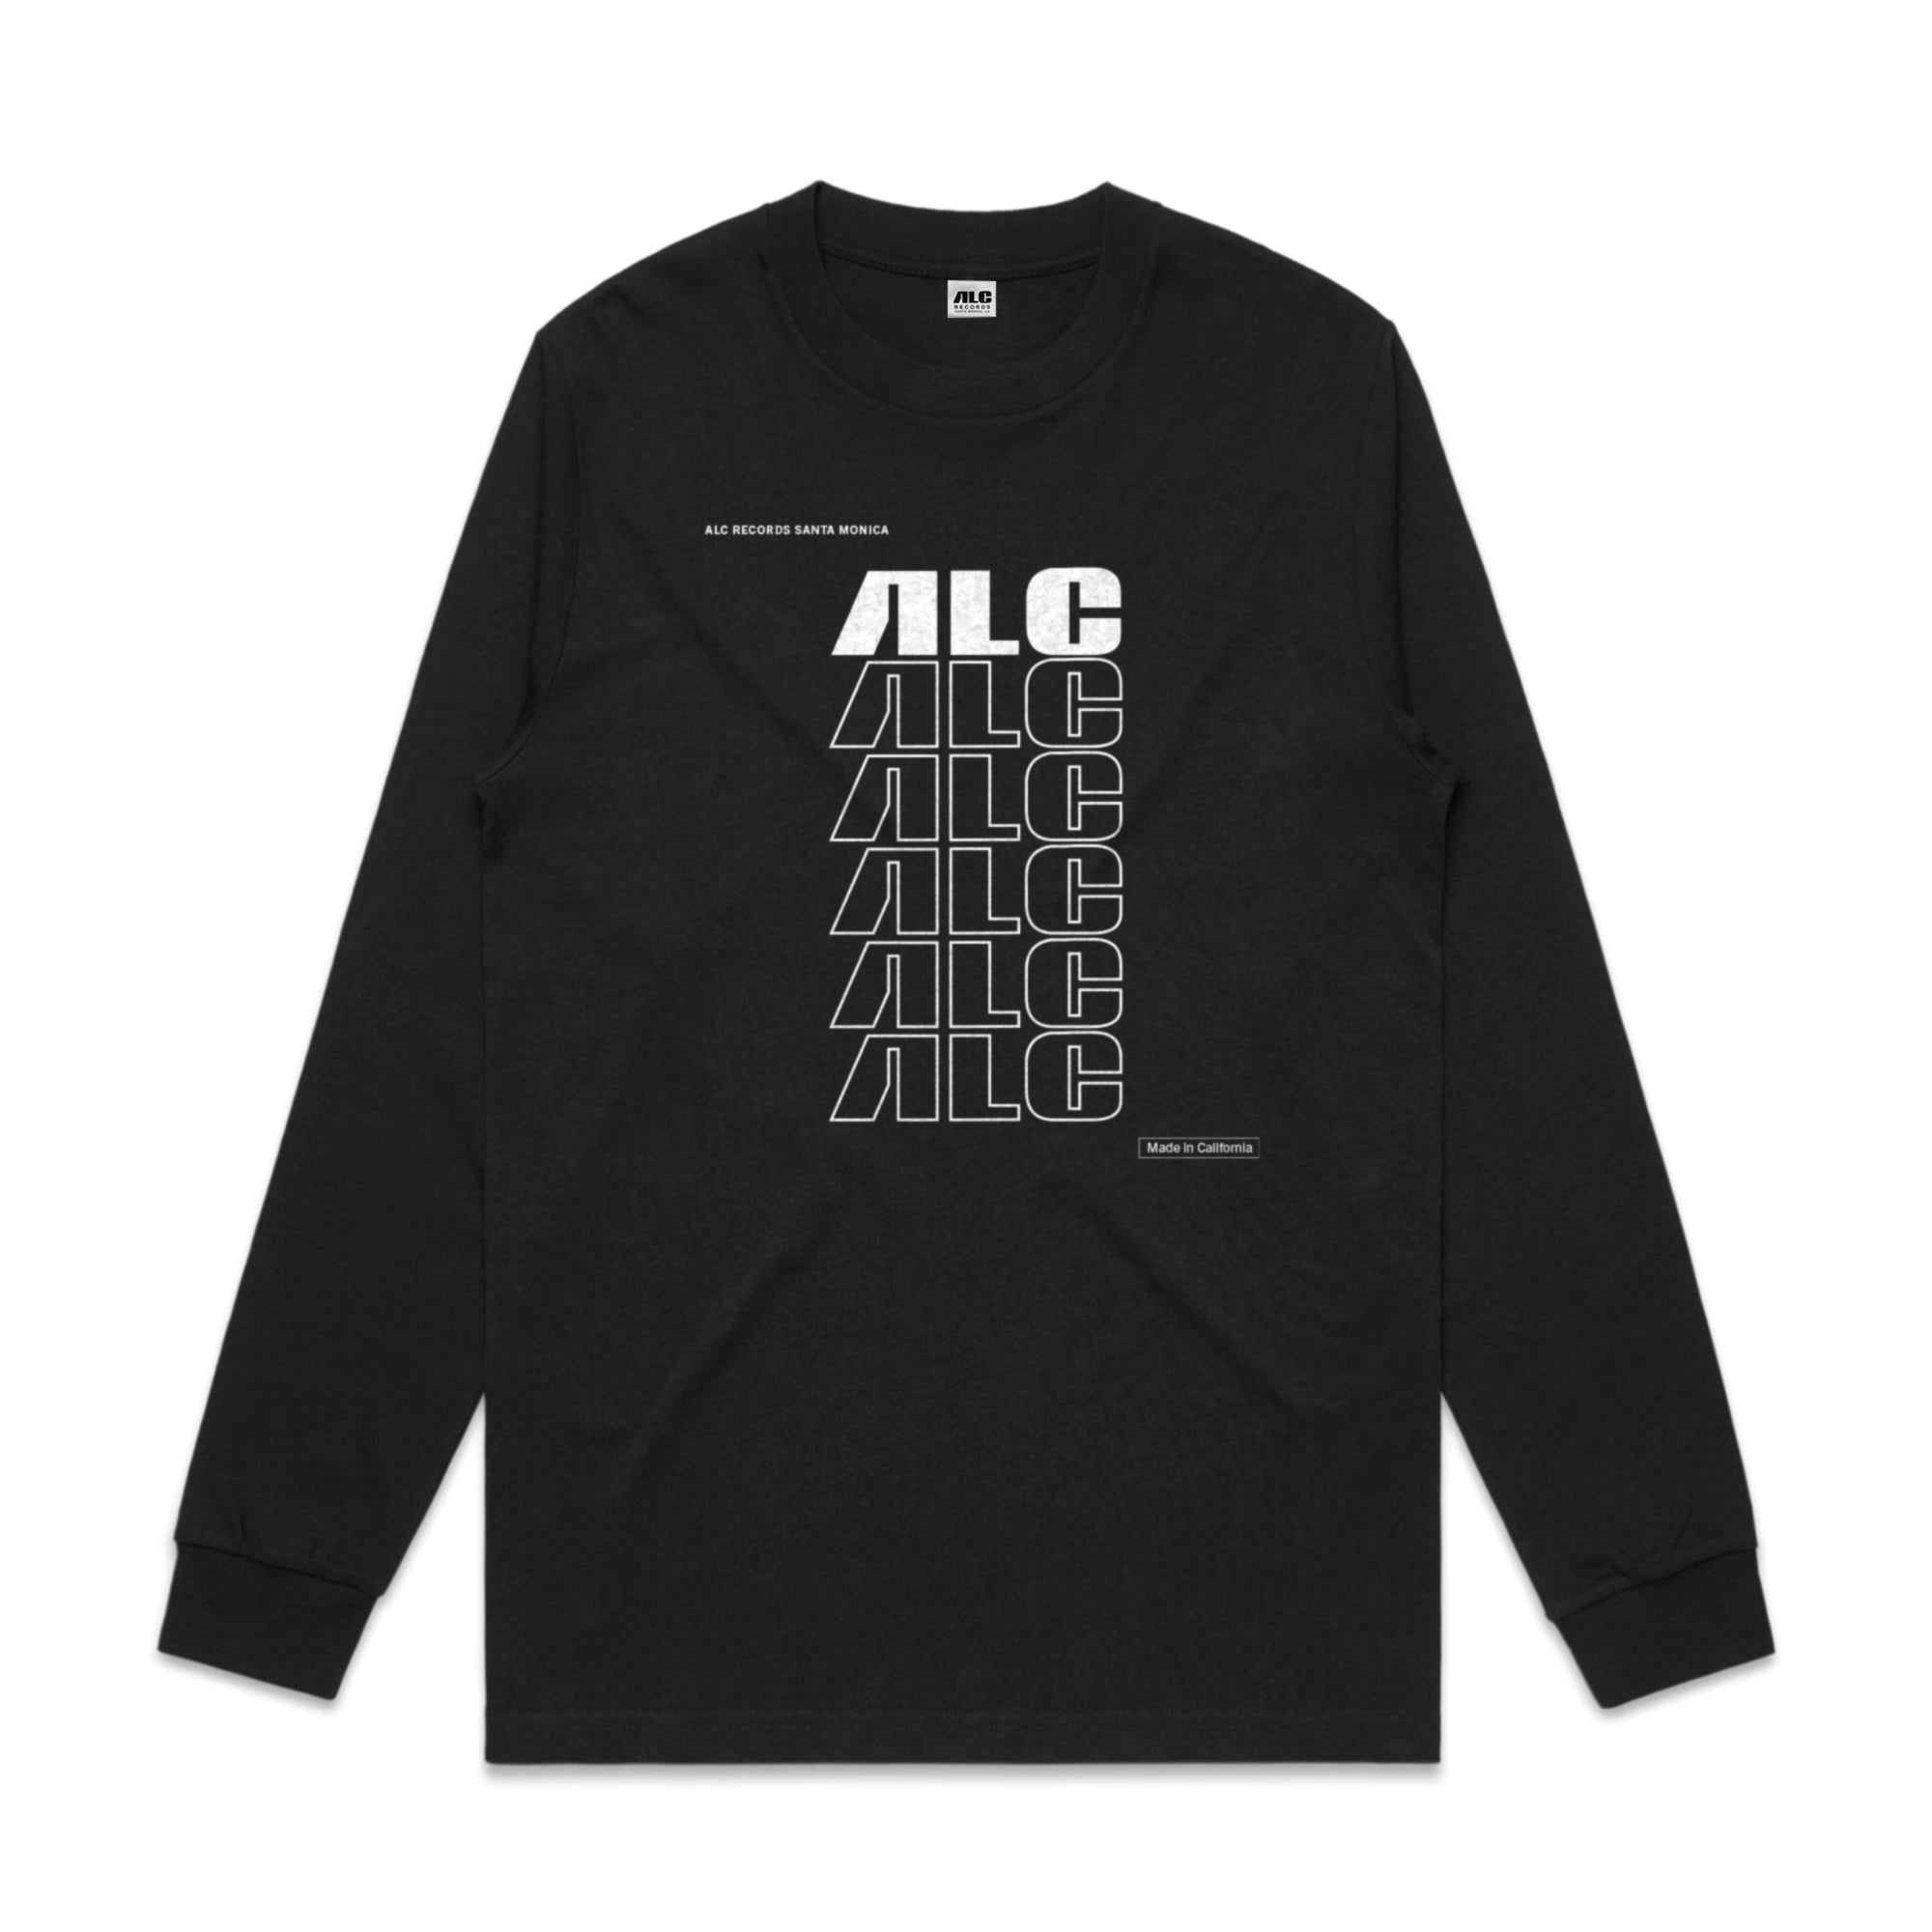 ALC Records "Made In California" (Longsleeve Black Shirt)